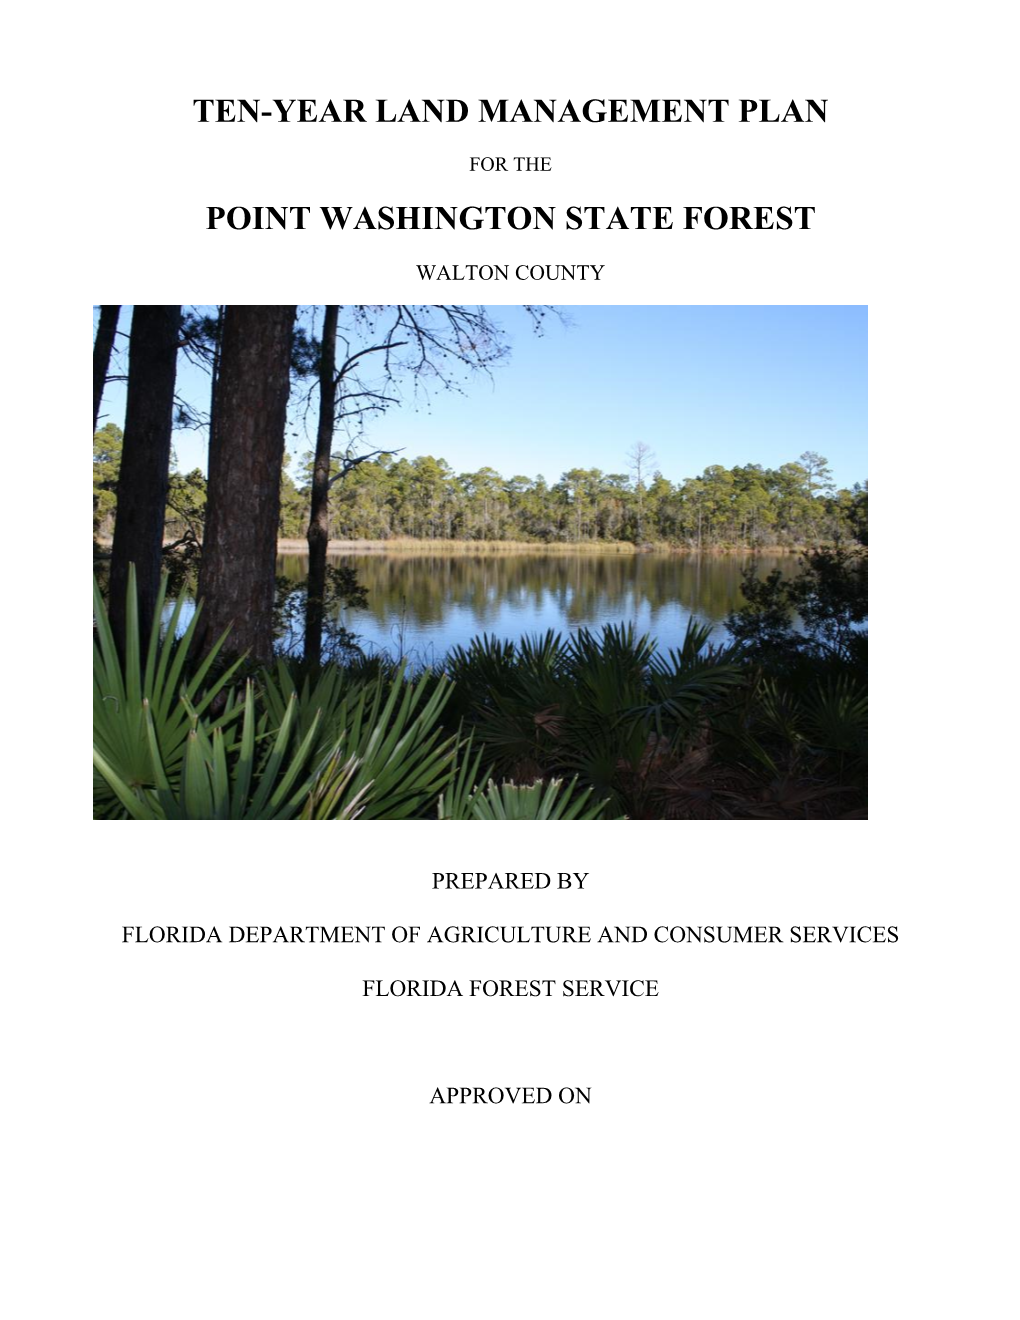 Point Washington State Forest Management Plan